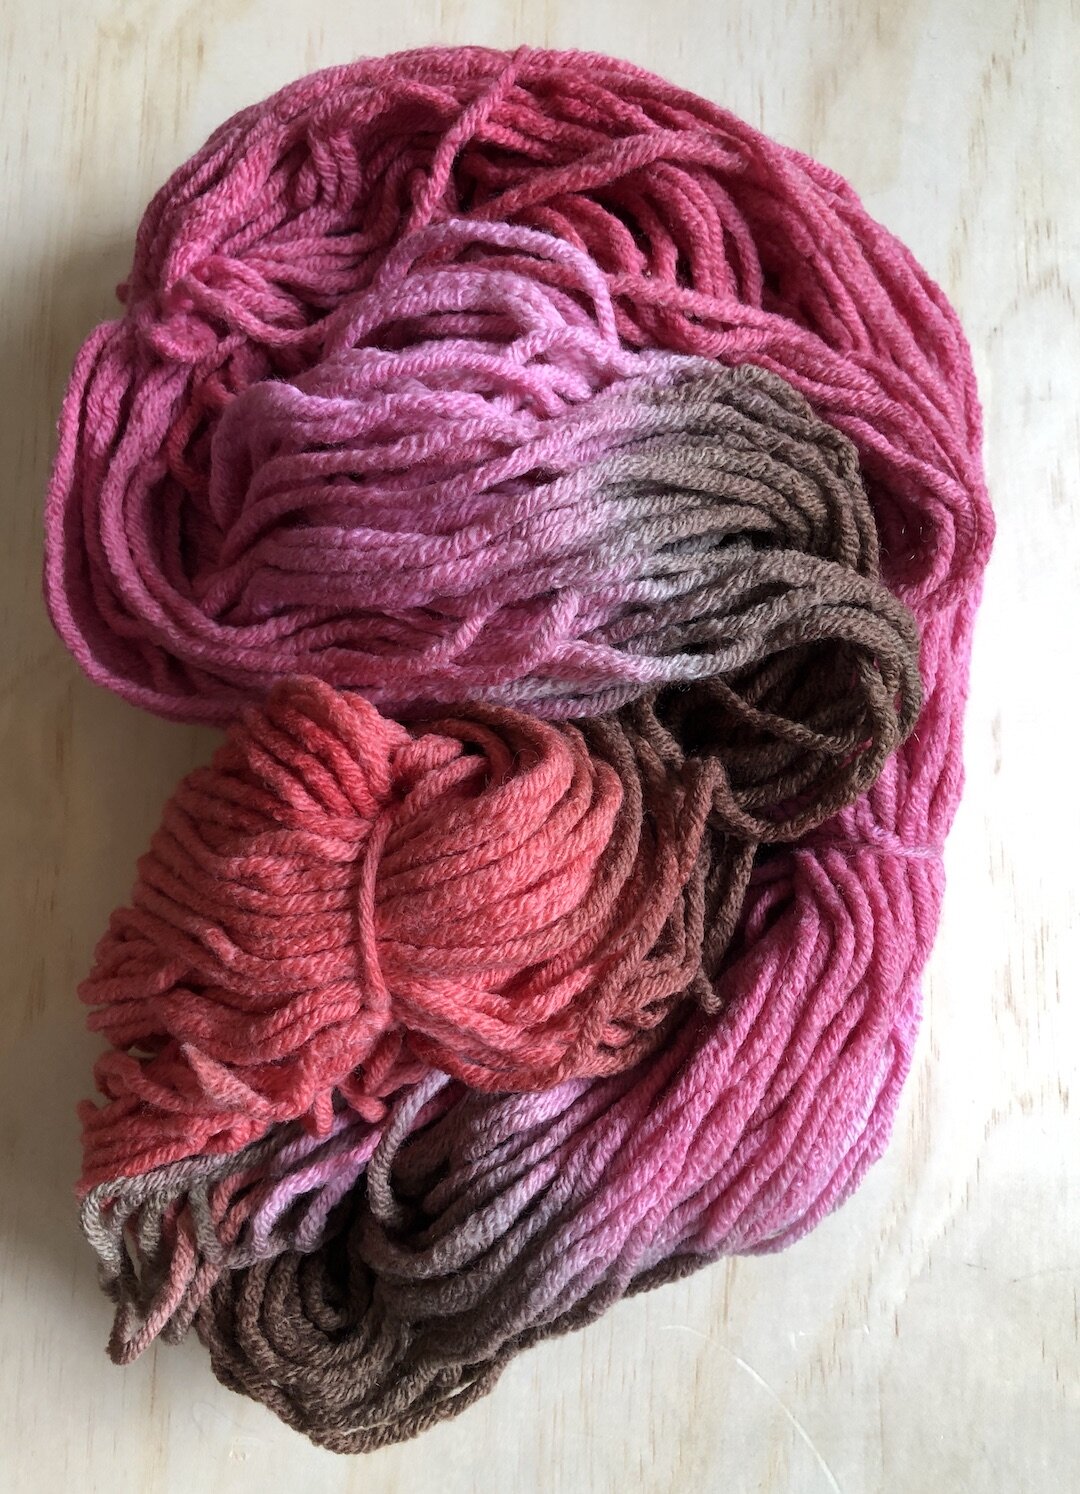 BULKY Fat and Soft Pure Wool Knitting yarn  - EARTHY